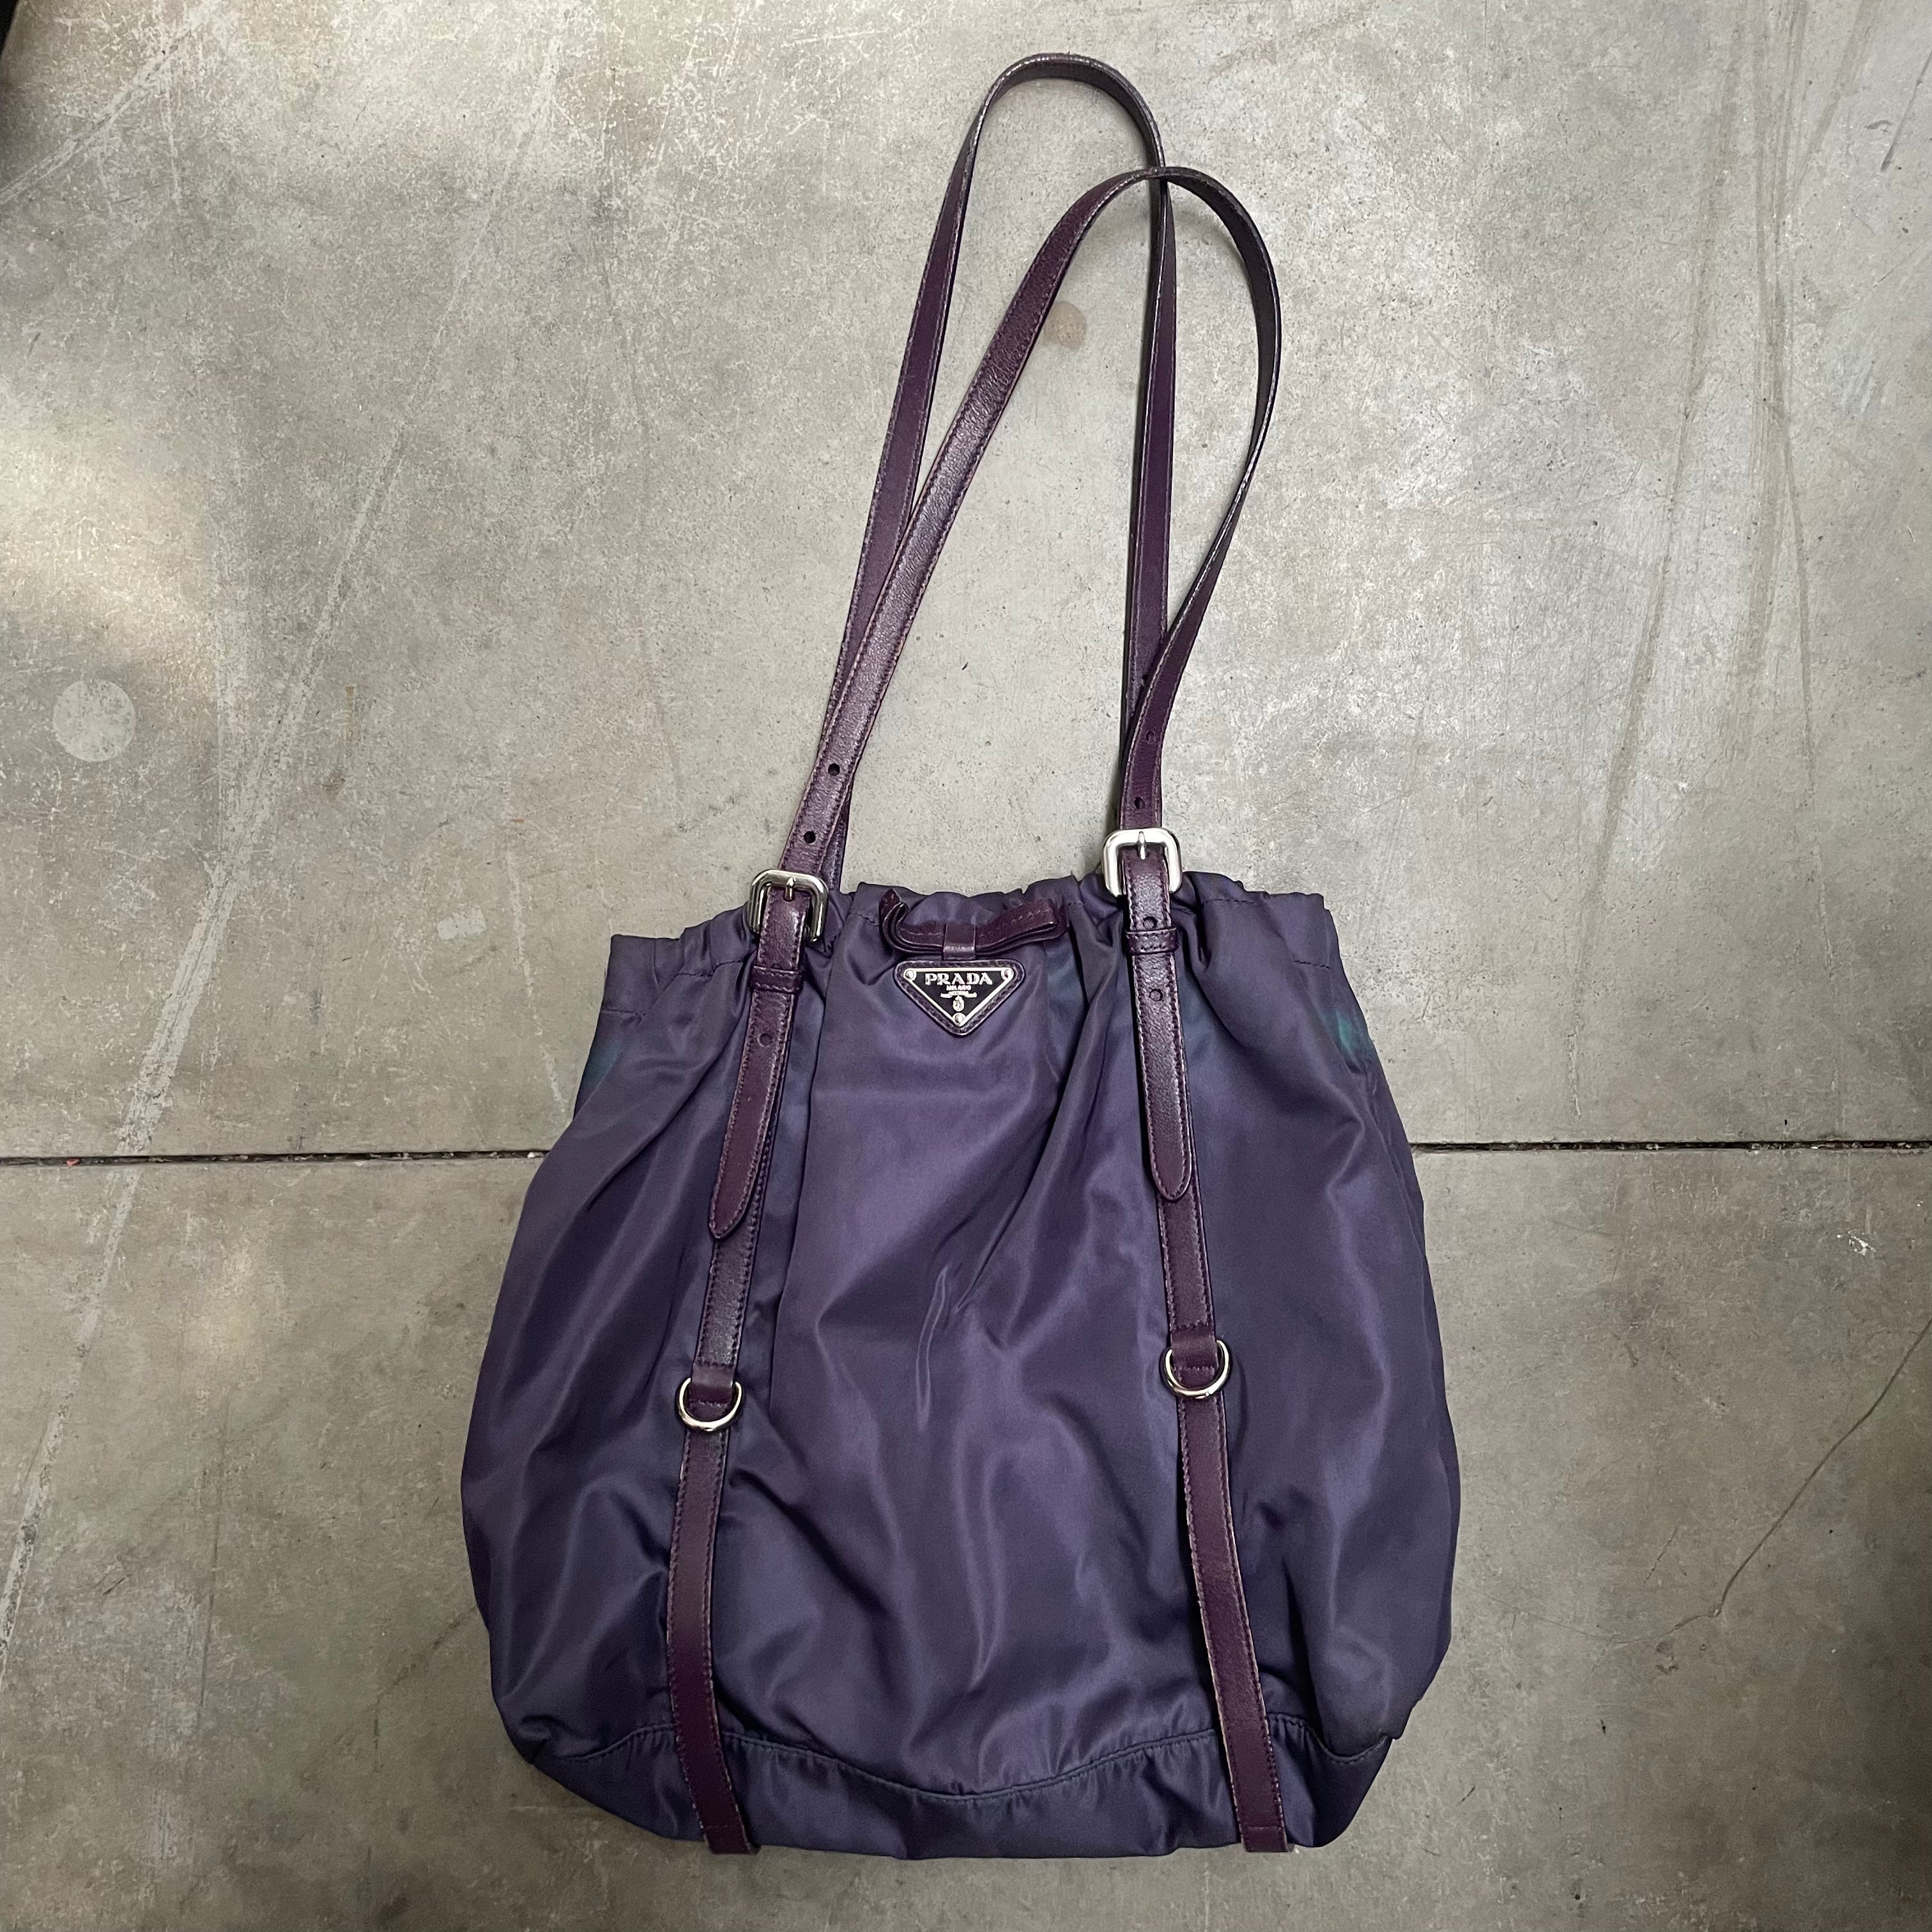 Prada Leather Strap Tote Bag Nylon Purple